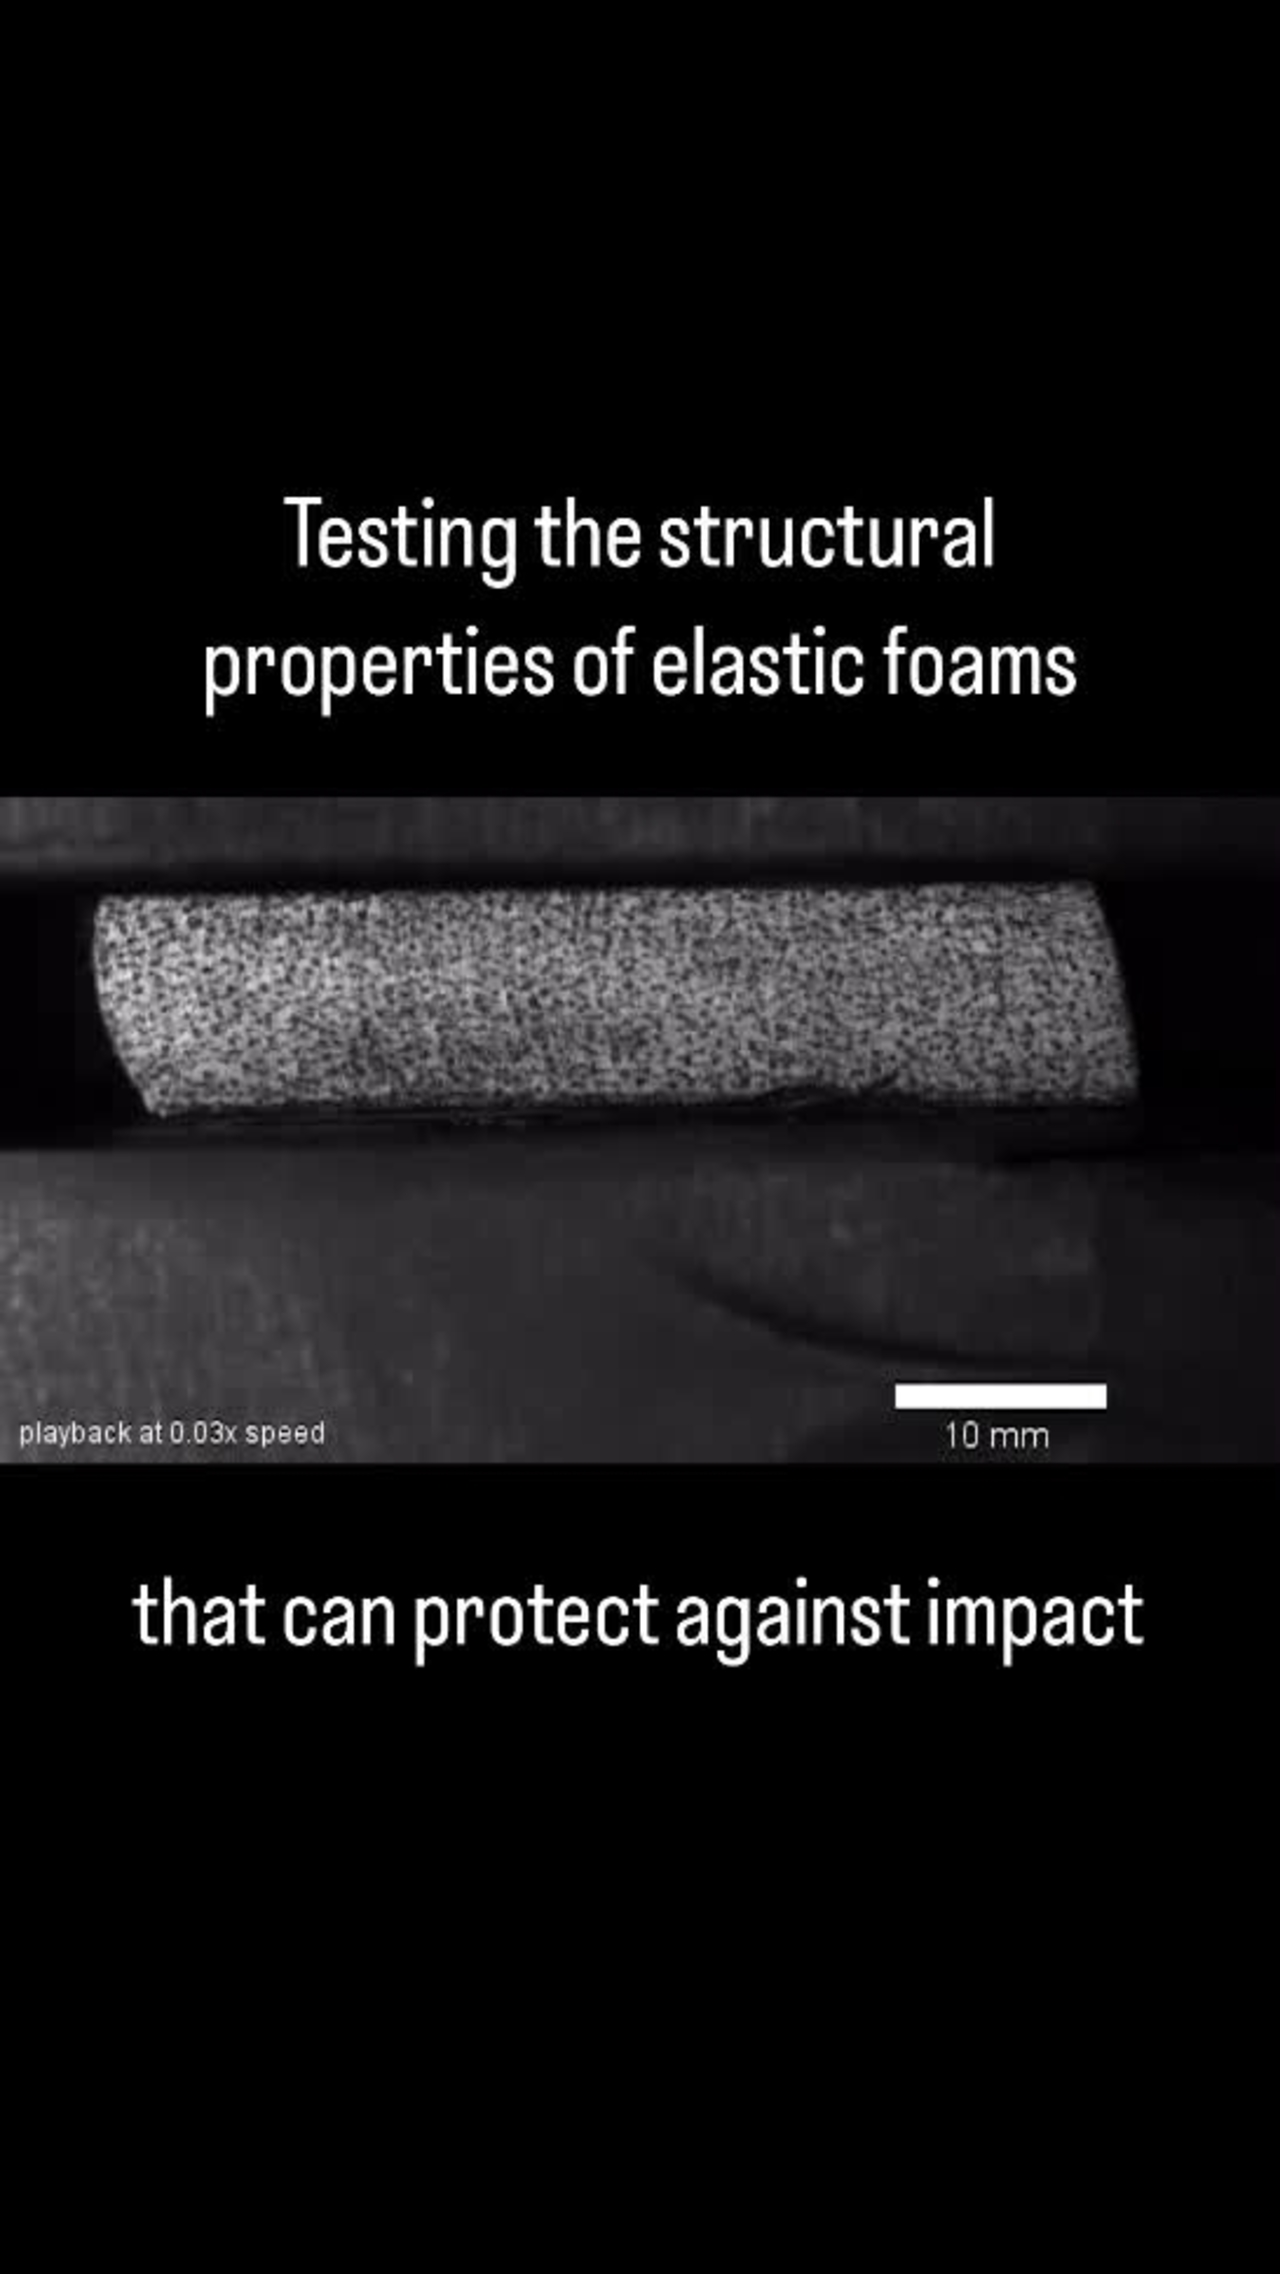 Testing impact protecting materials